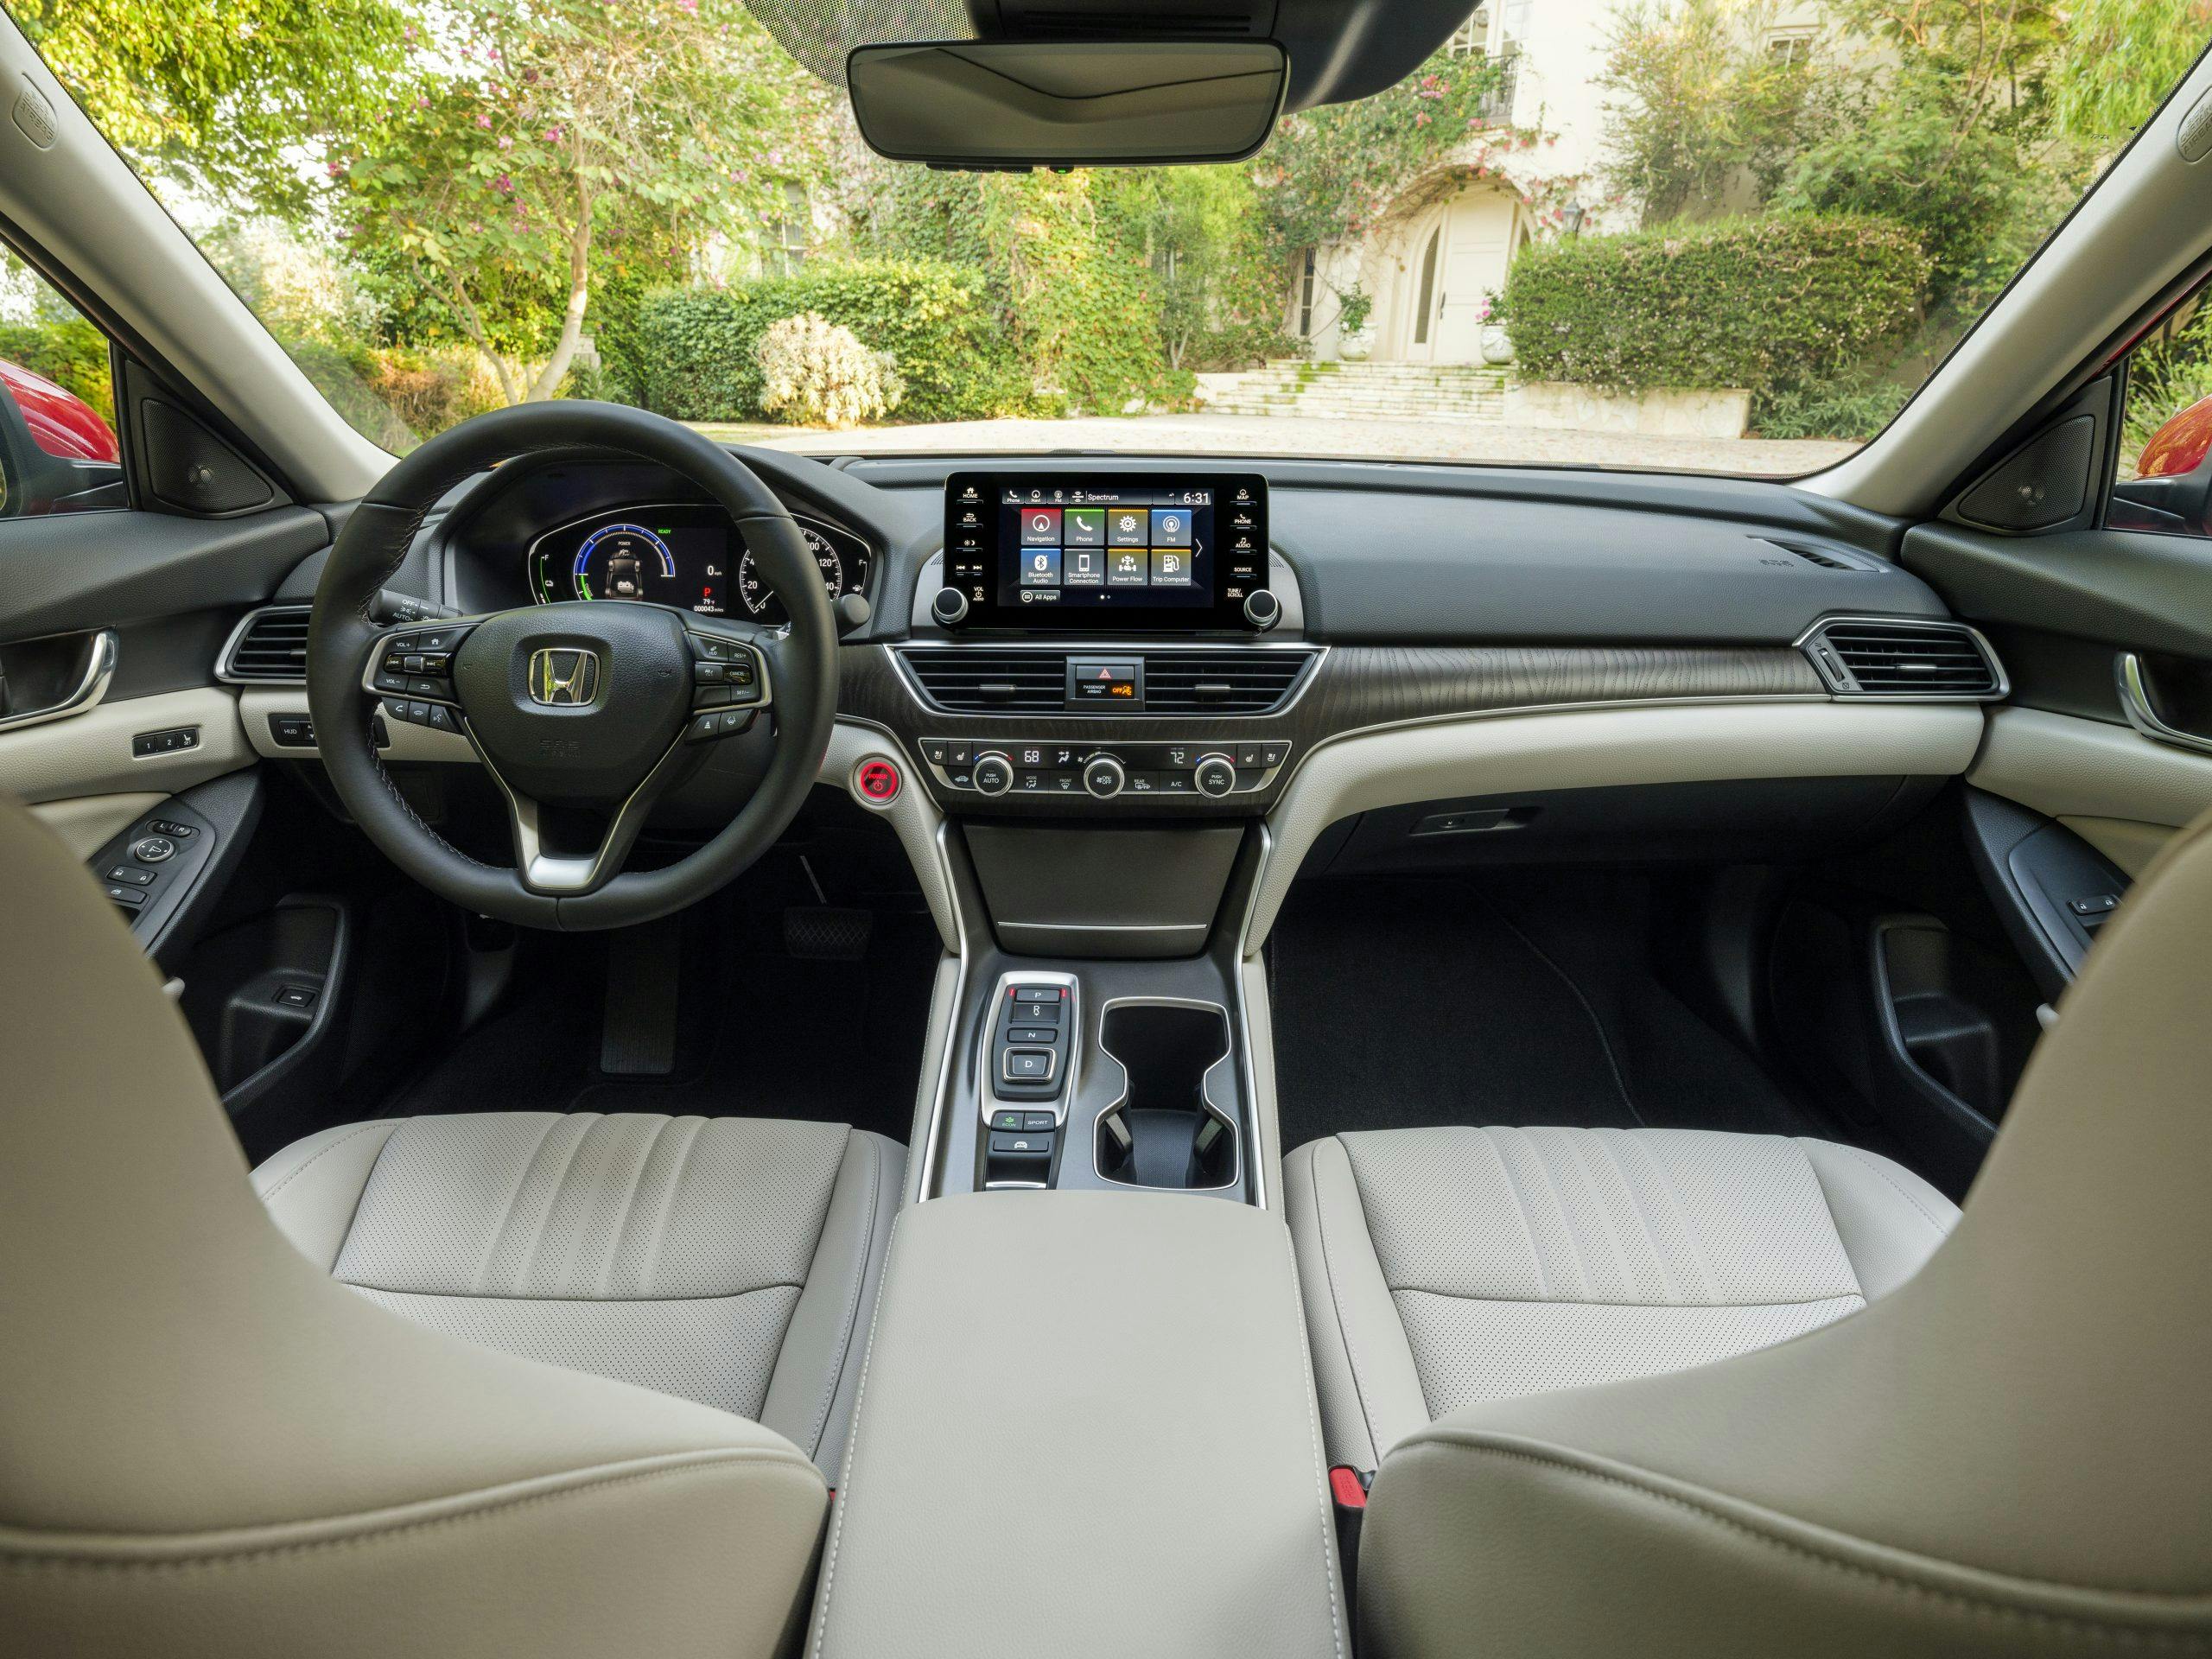 Honda Accord Hybrid interior front